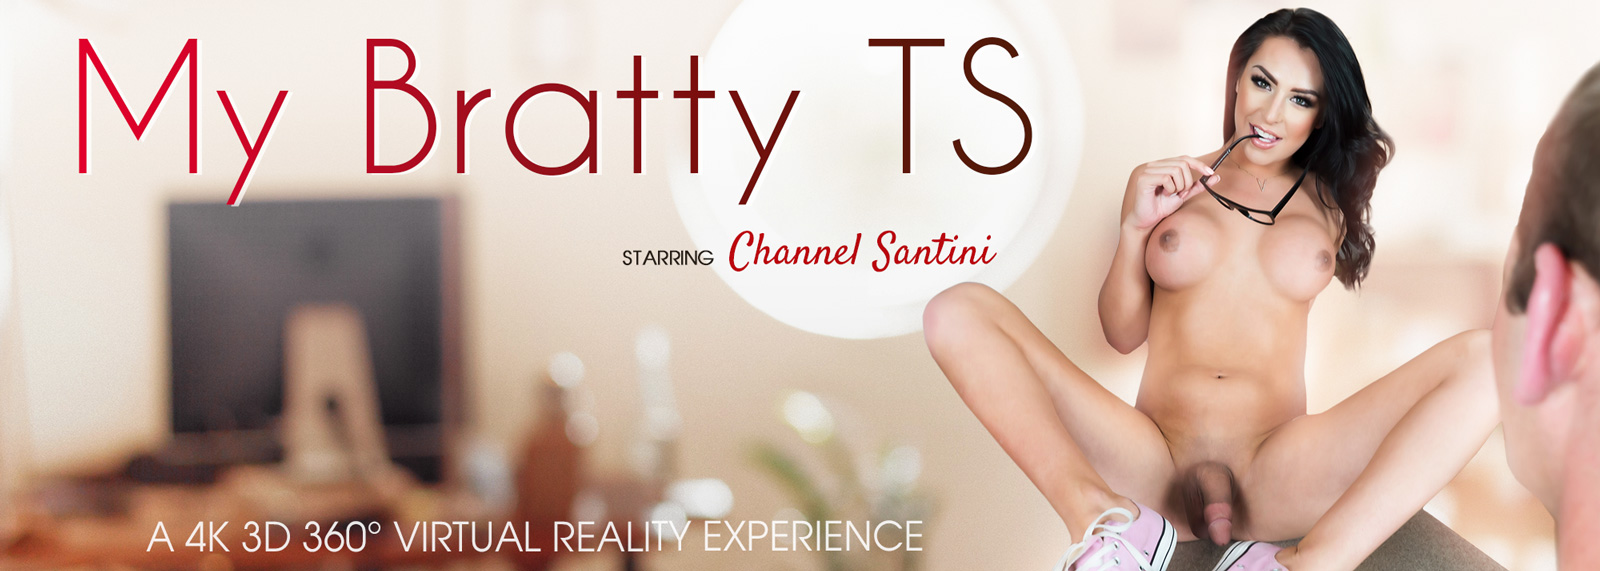 My Bratty TS - Trans VR Porn Video, Starring: Chanel Santini